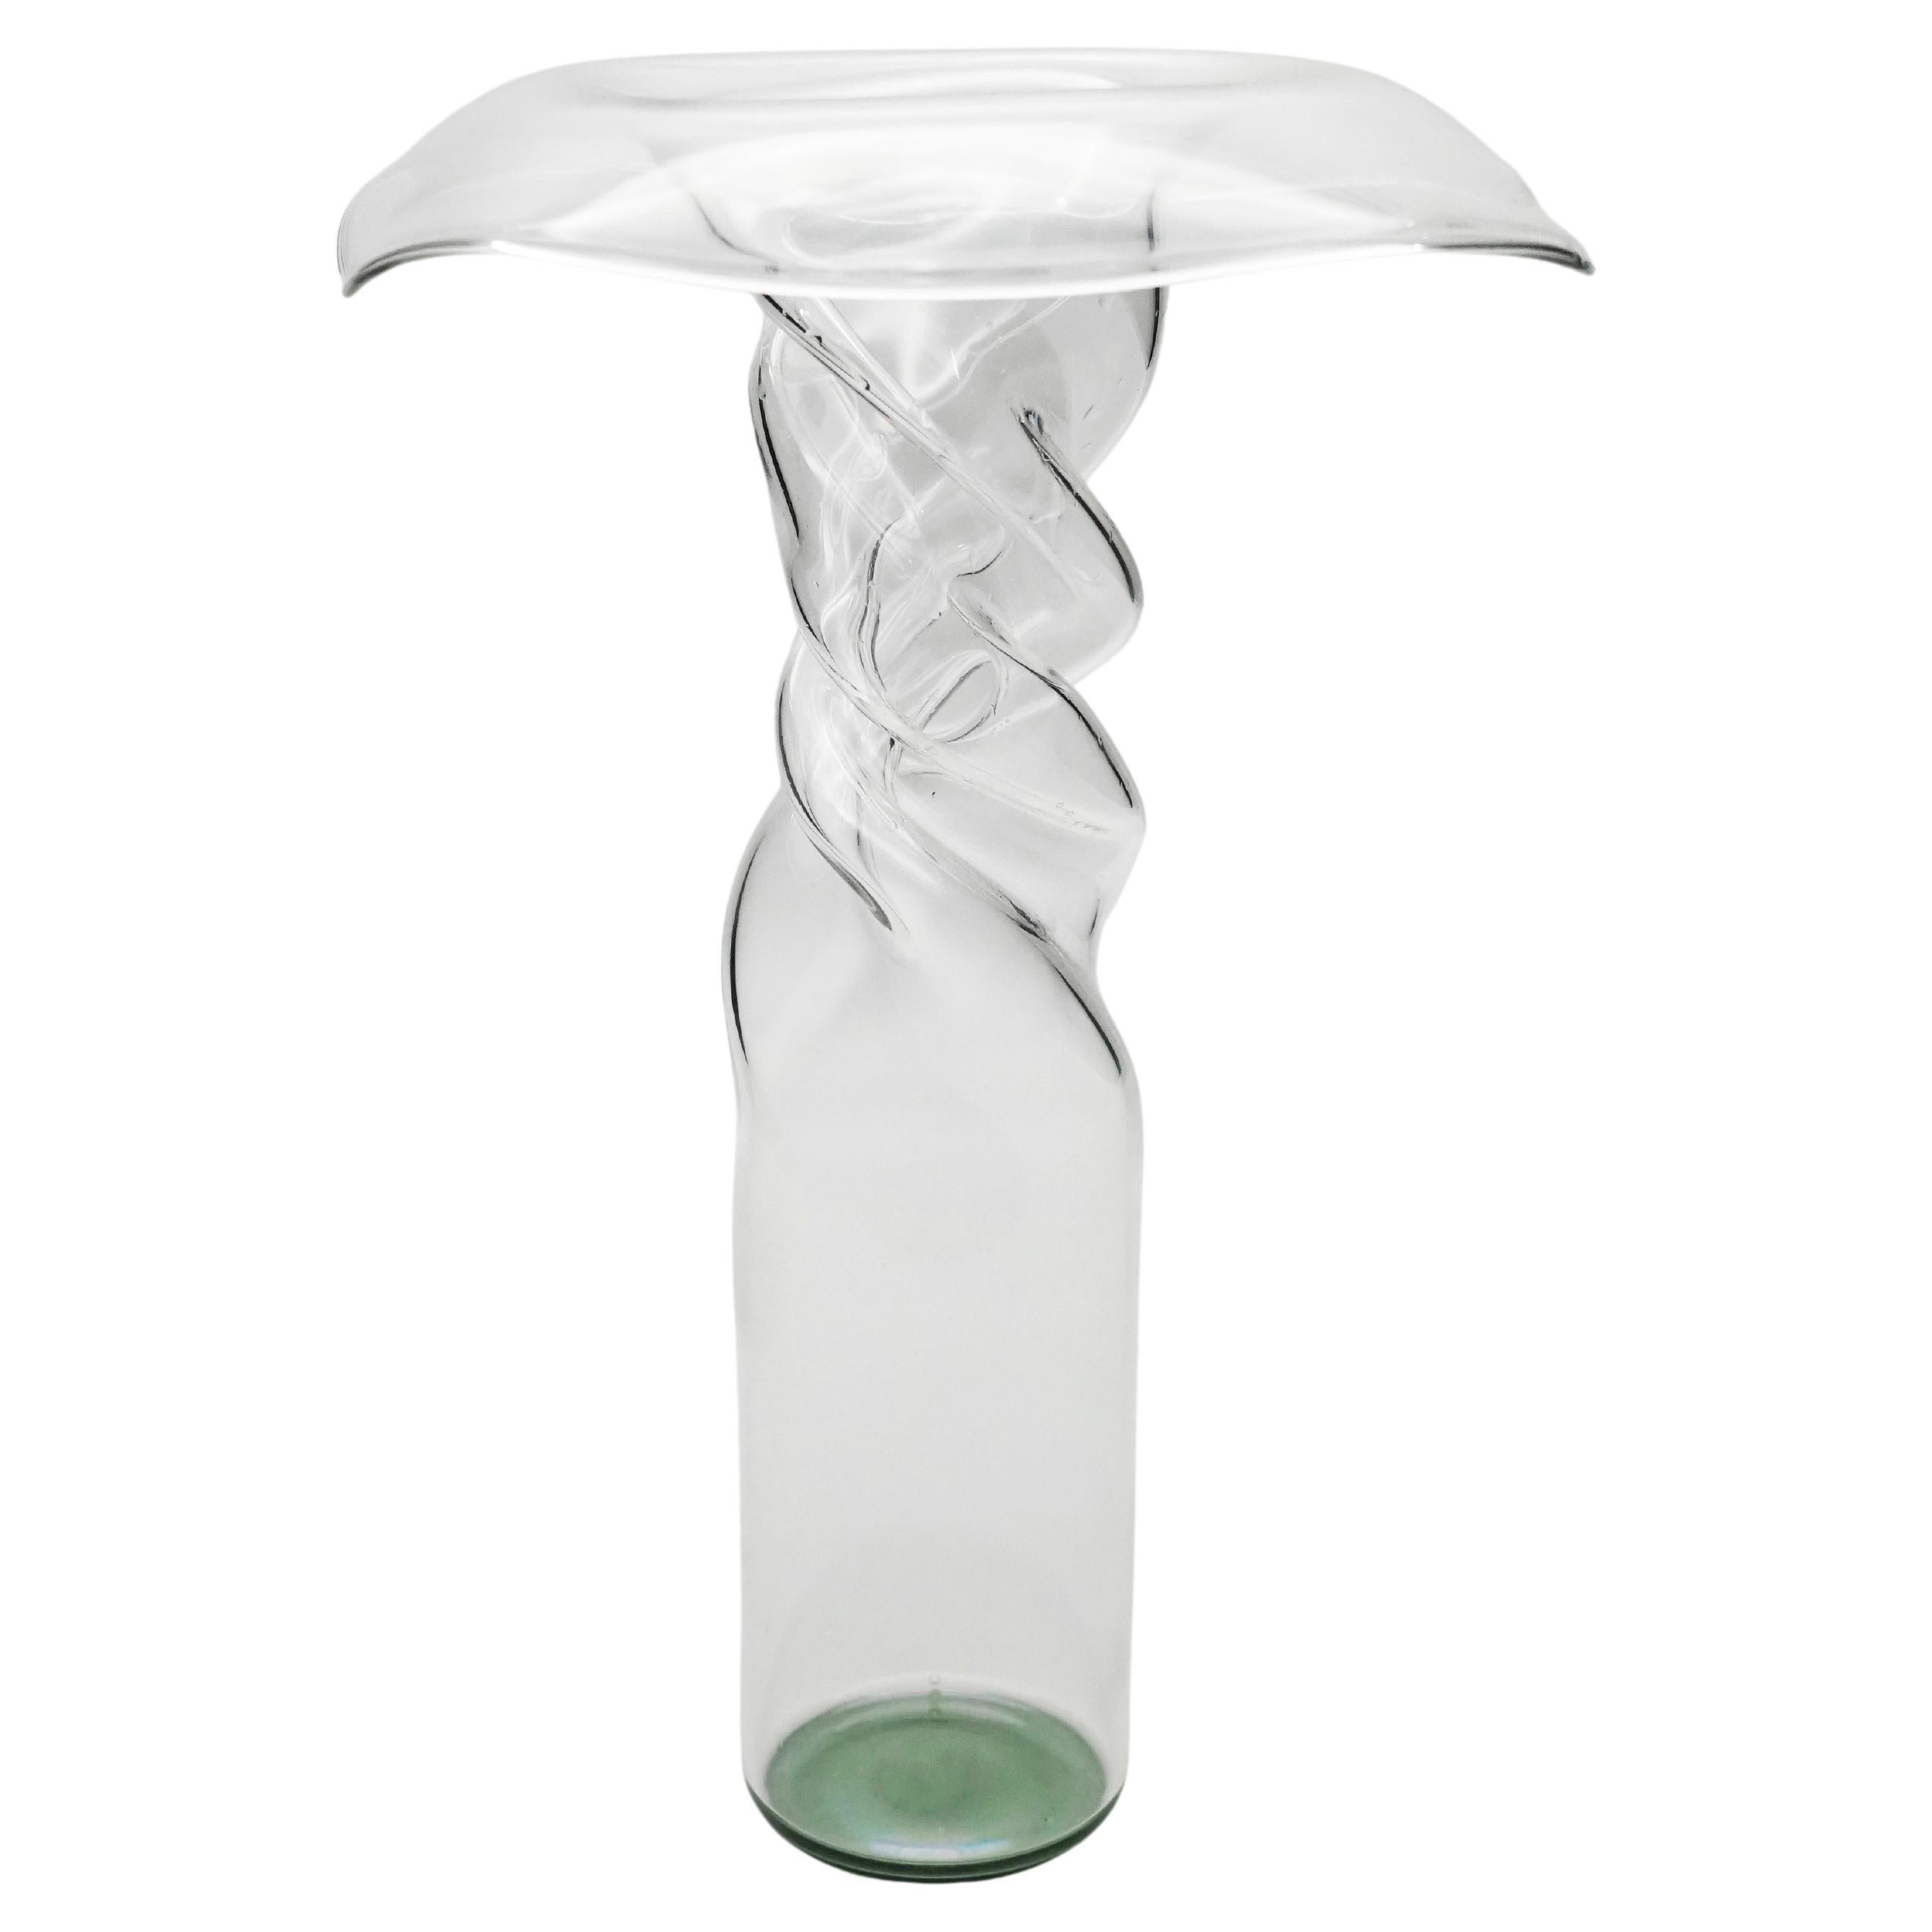 21st Century Handcrafted Glass Vase Poppy, Green Bottom, Kanz Architetti For Sale